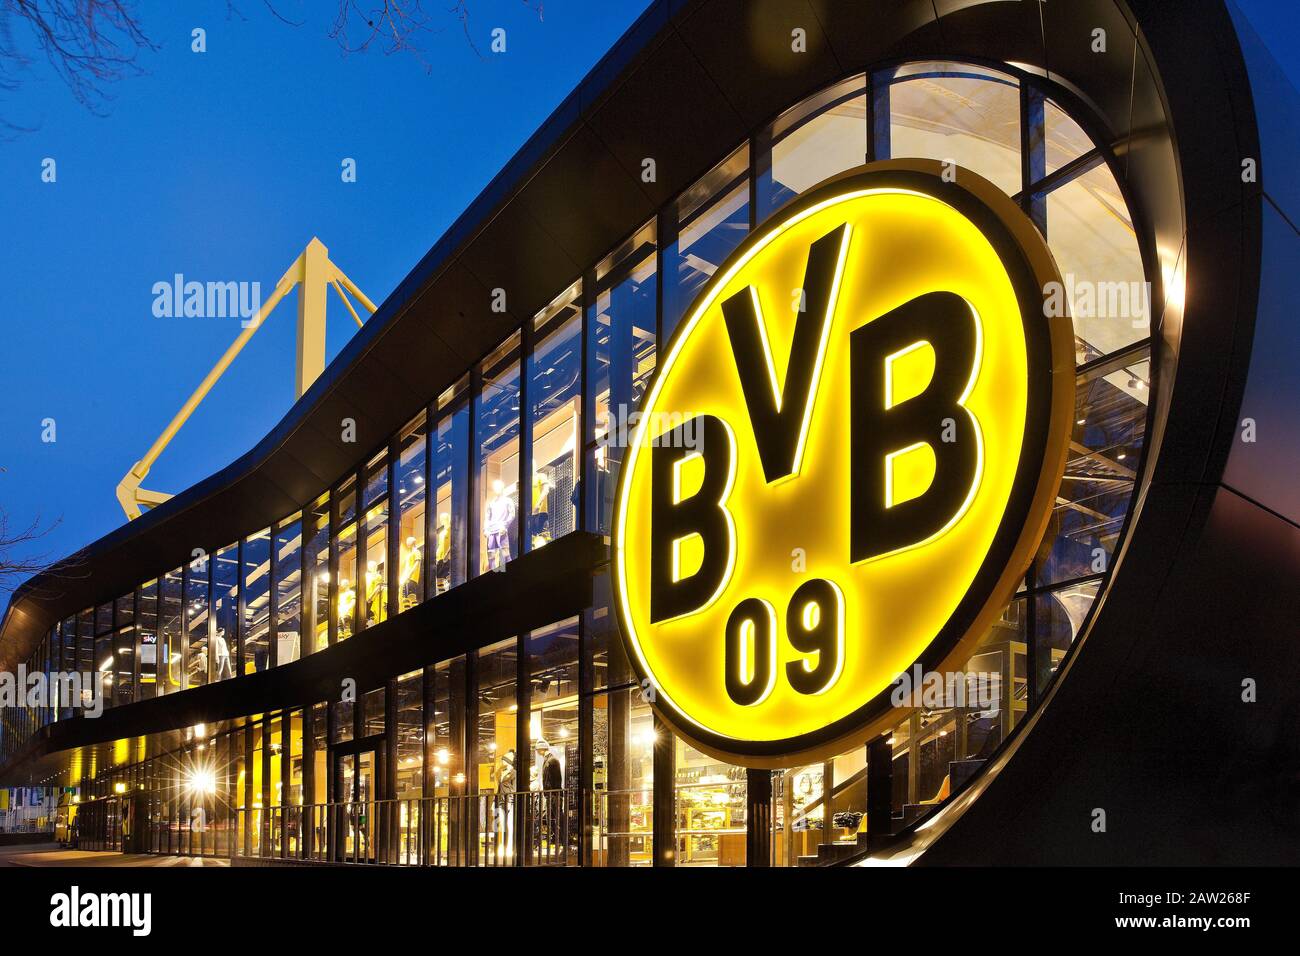 Borussia Dortmund fan shop and football stadium Signal Iduna Park in background, Germany, North Rhine-Westphalia, Ruhr Area, Dortmund Stock Photo